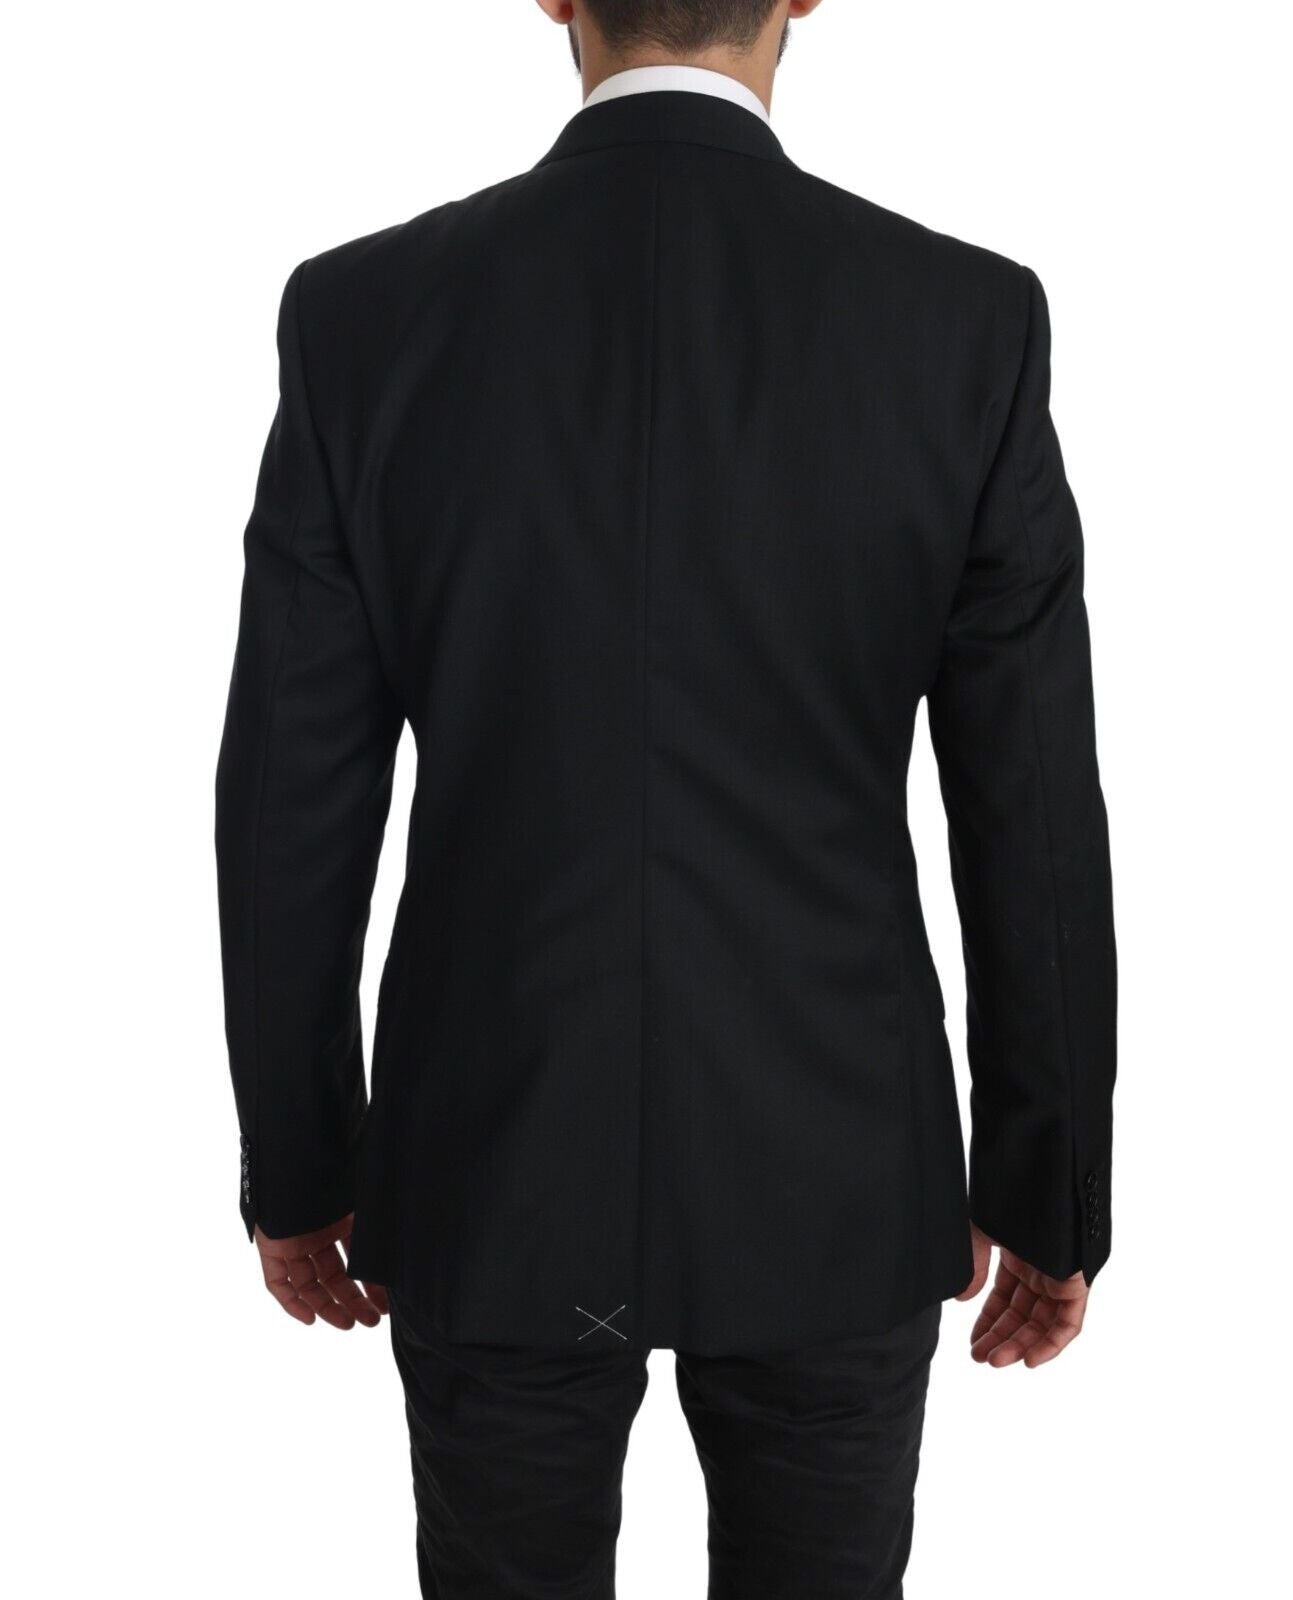 Black Slim Jacket Coat MARTINI Blazer